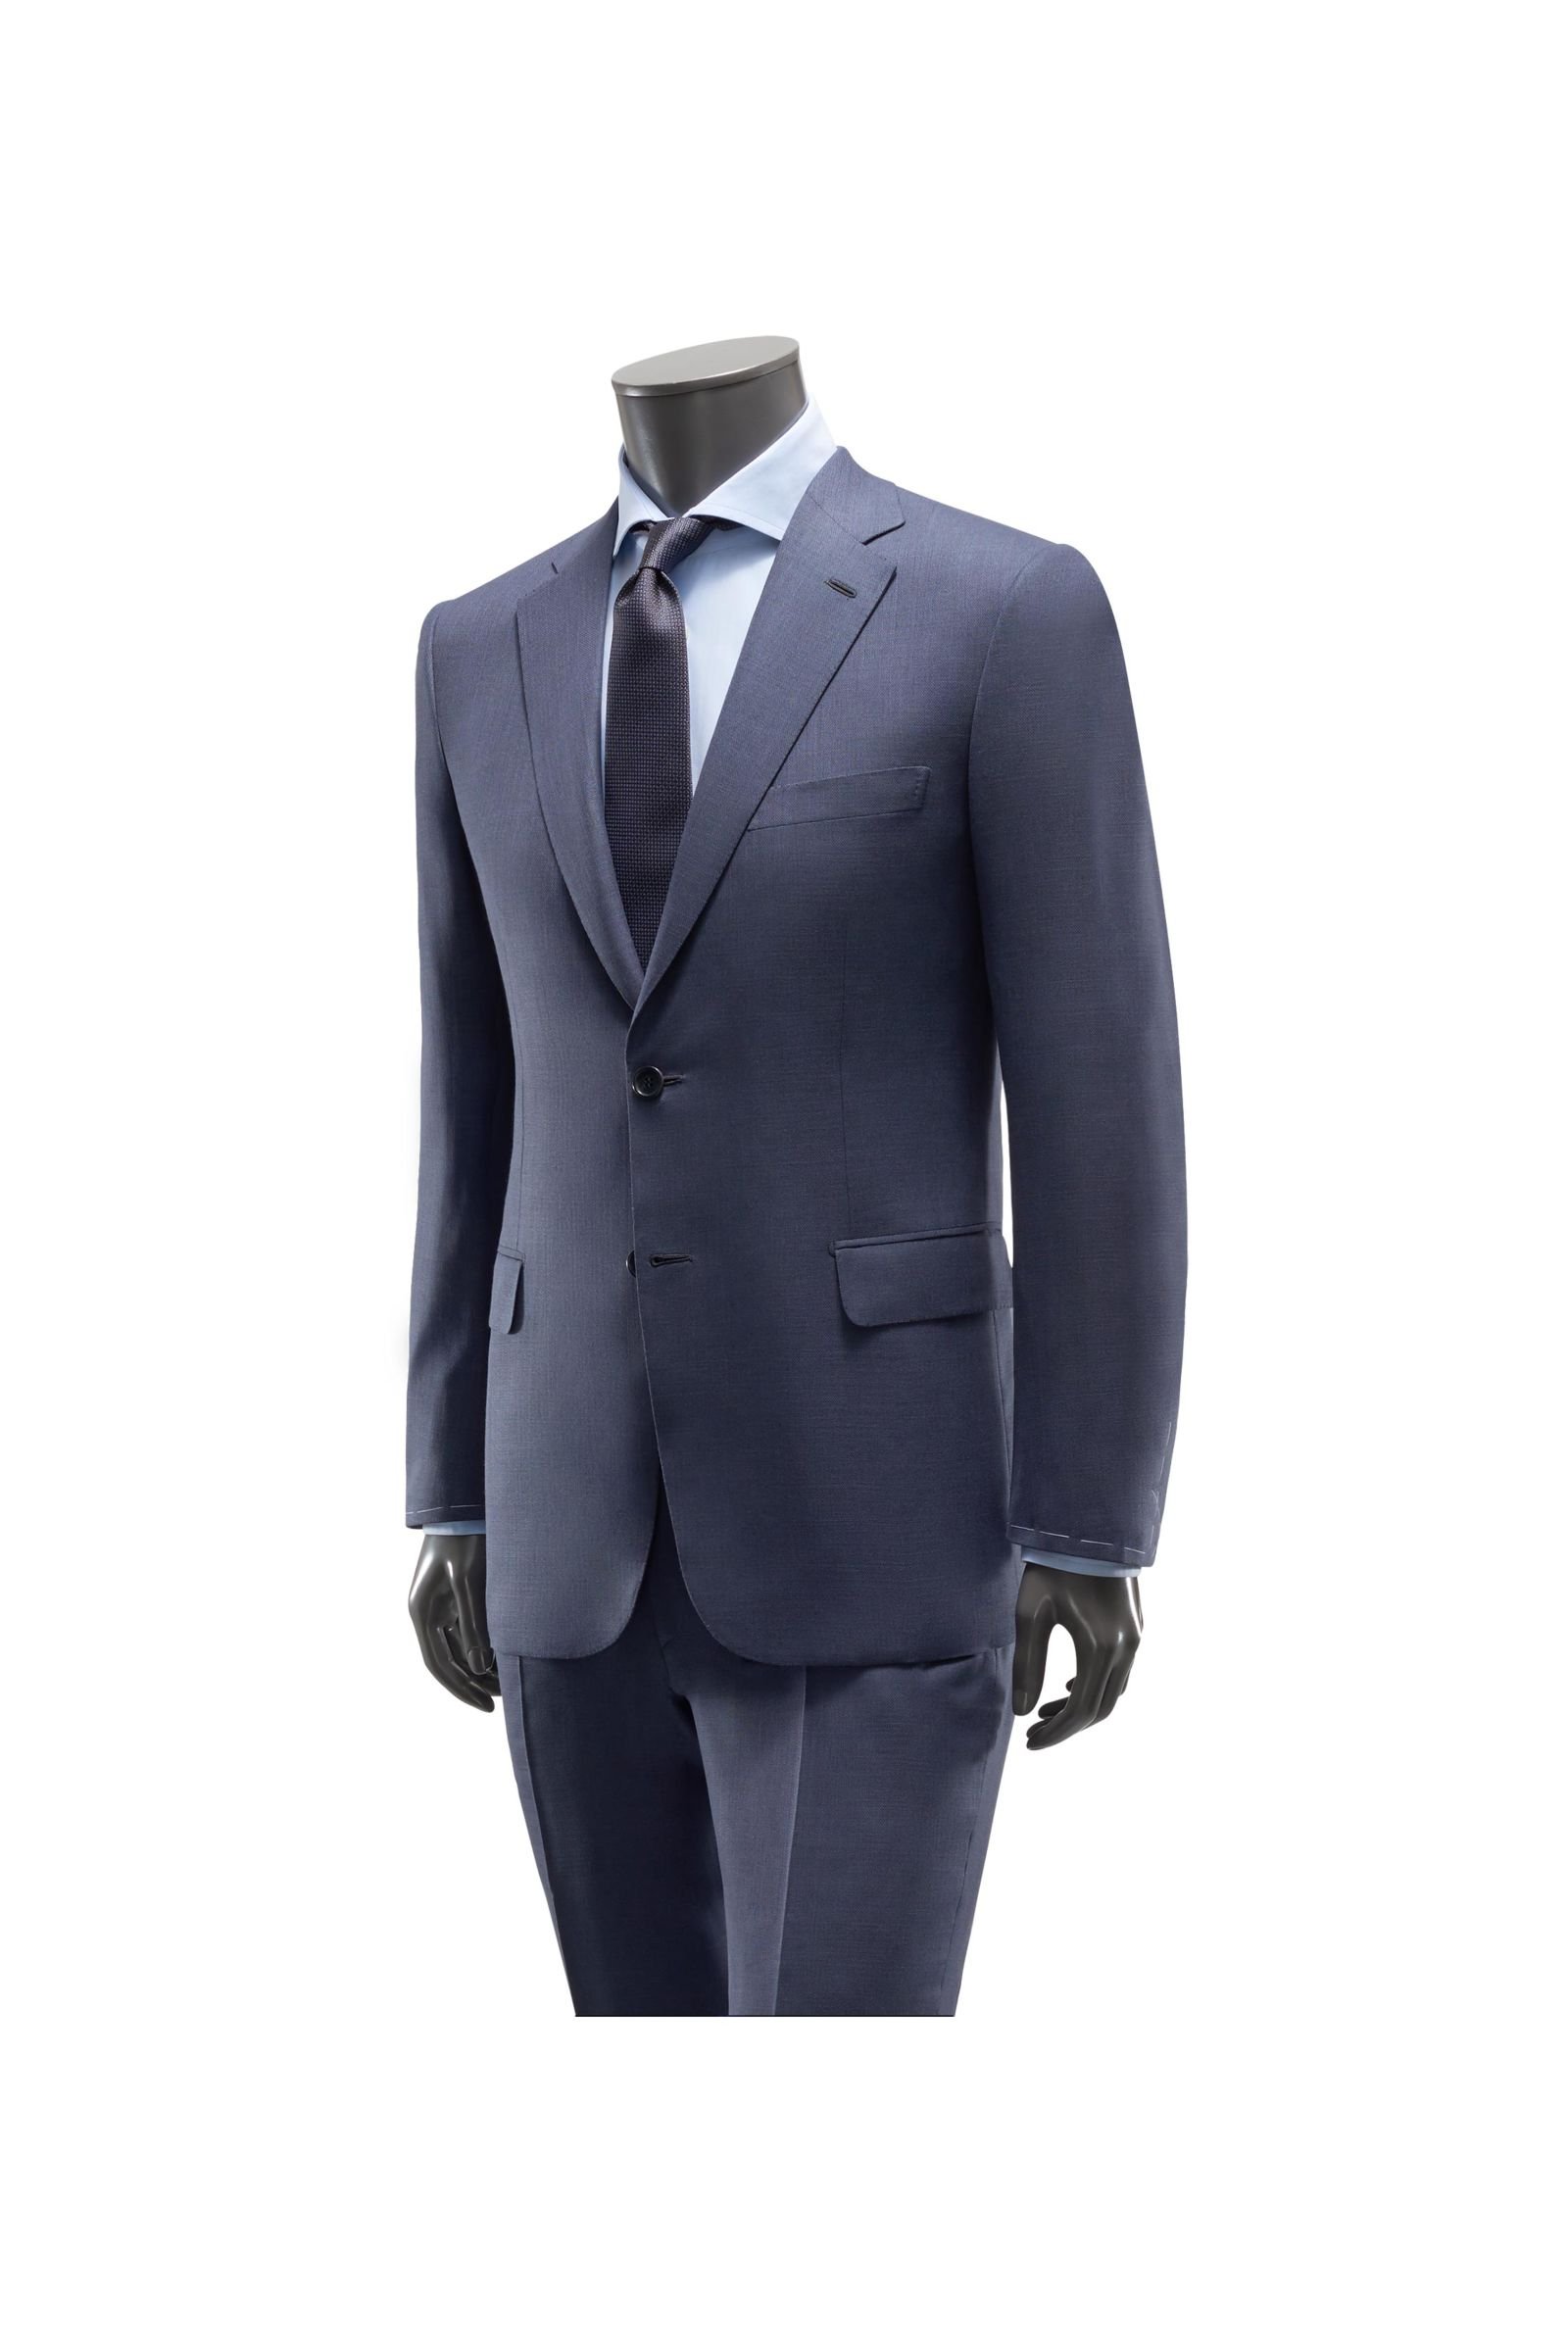 Suit 'Brunico' grey-blue